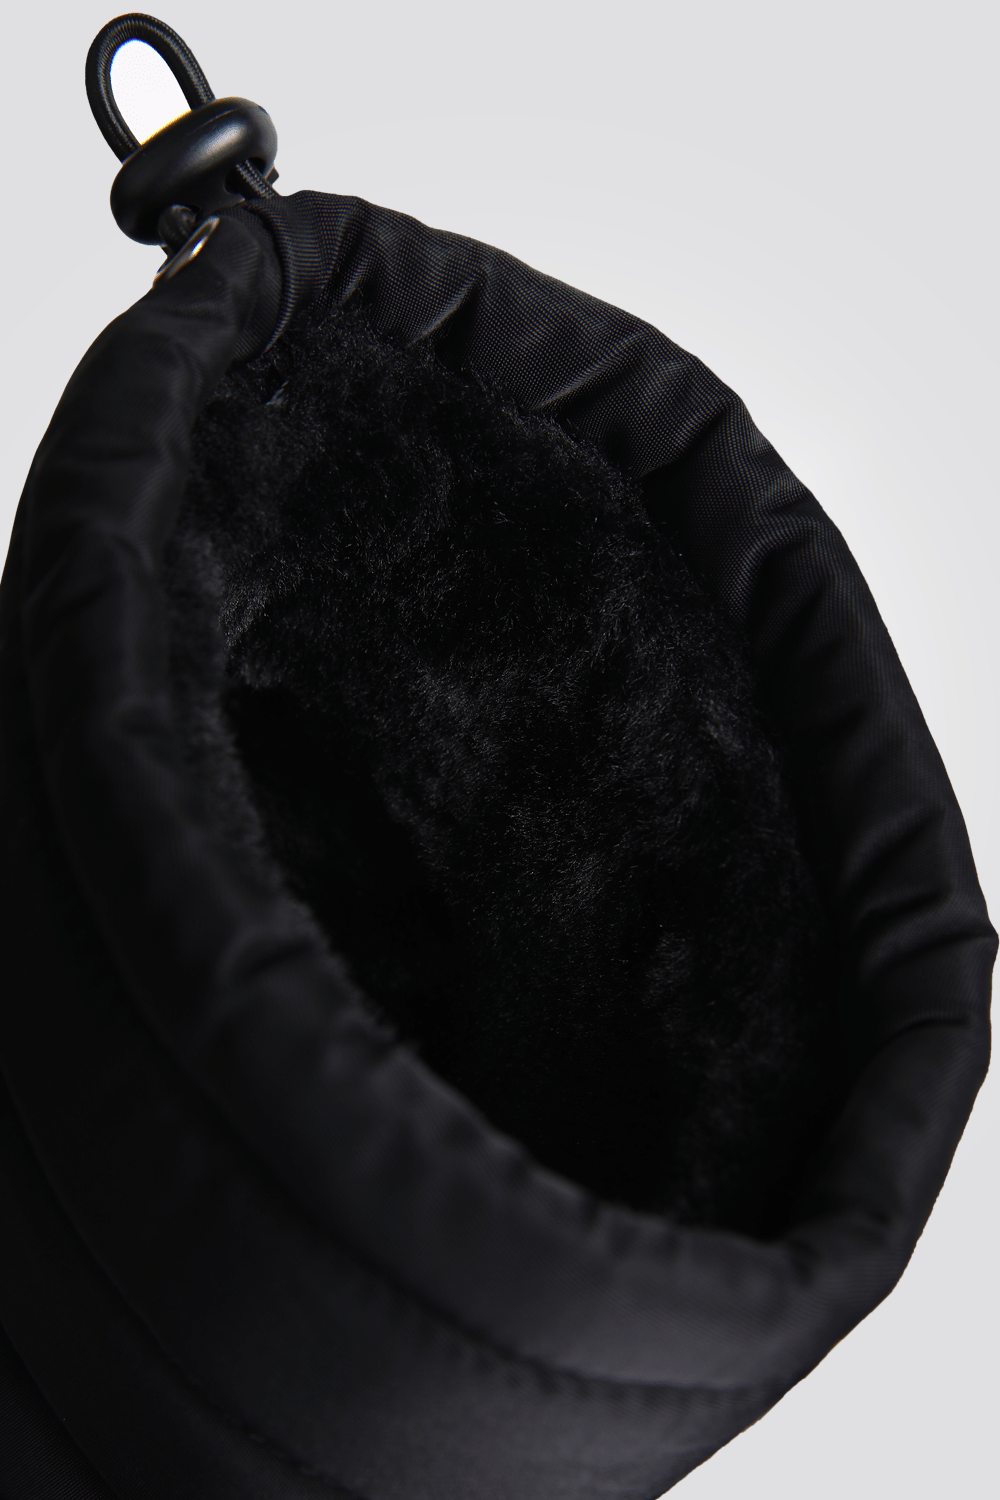 KENNETH COLE - מגפון סקי לנשים בצבע שחור - MASHBIR//365